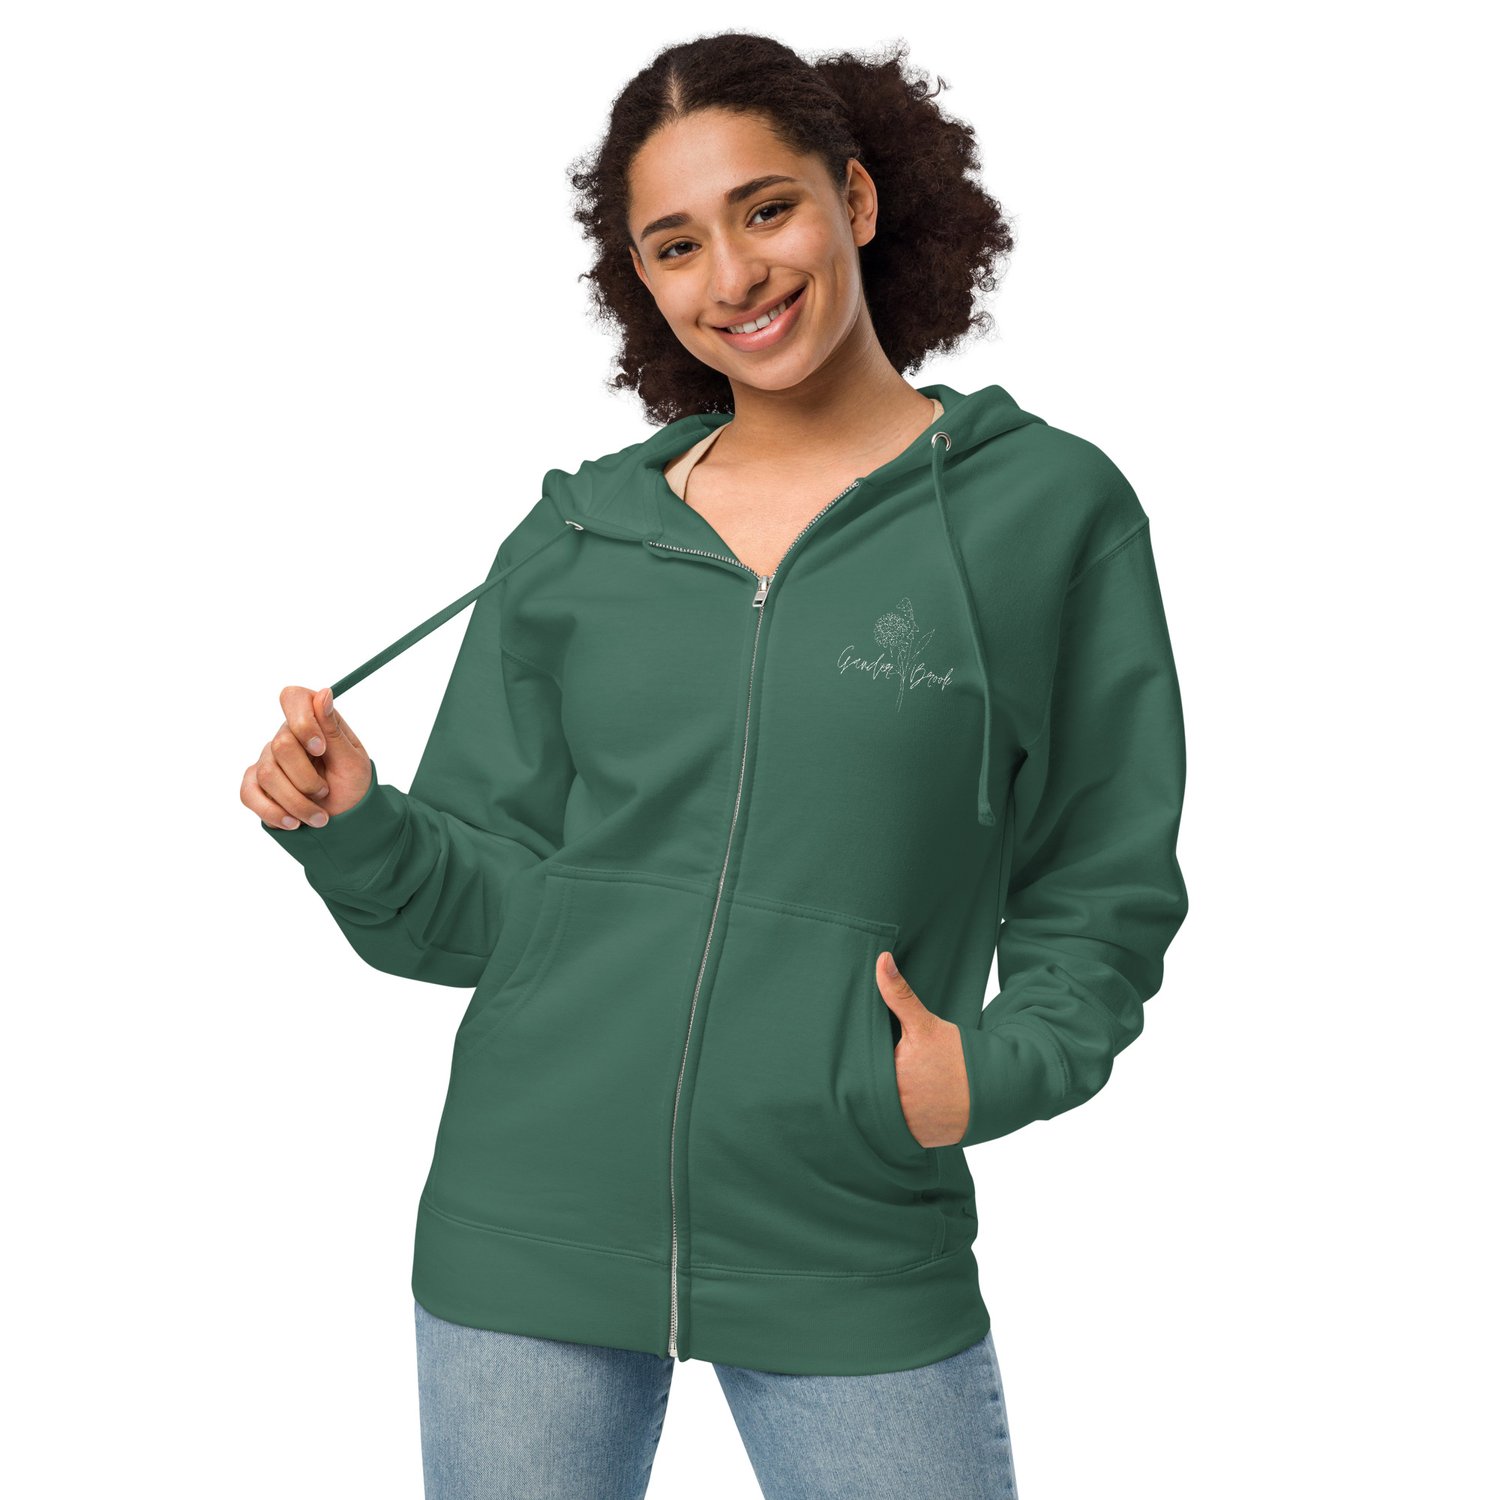 Floral GB embroidered fleece zip up hoodie — Gander Brook Christian Camp